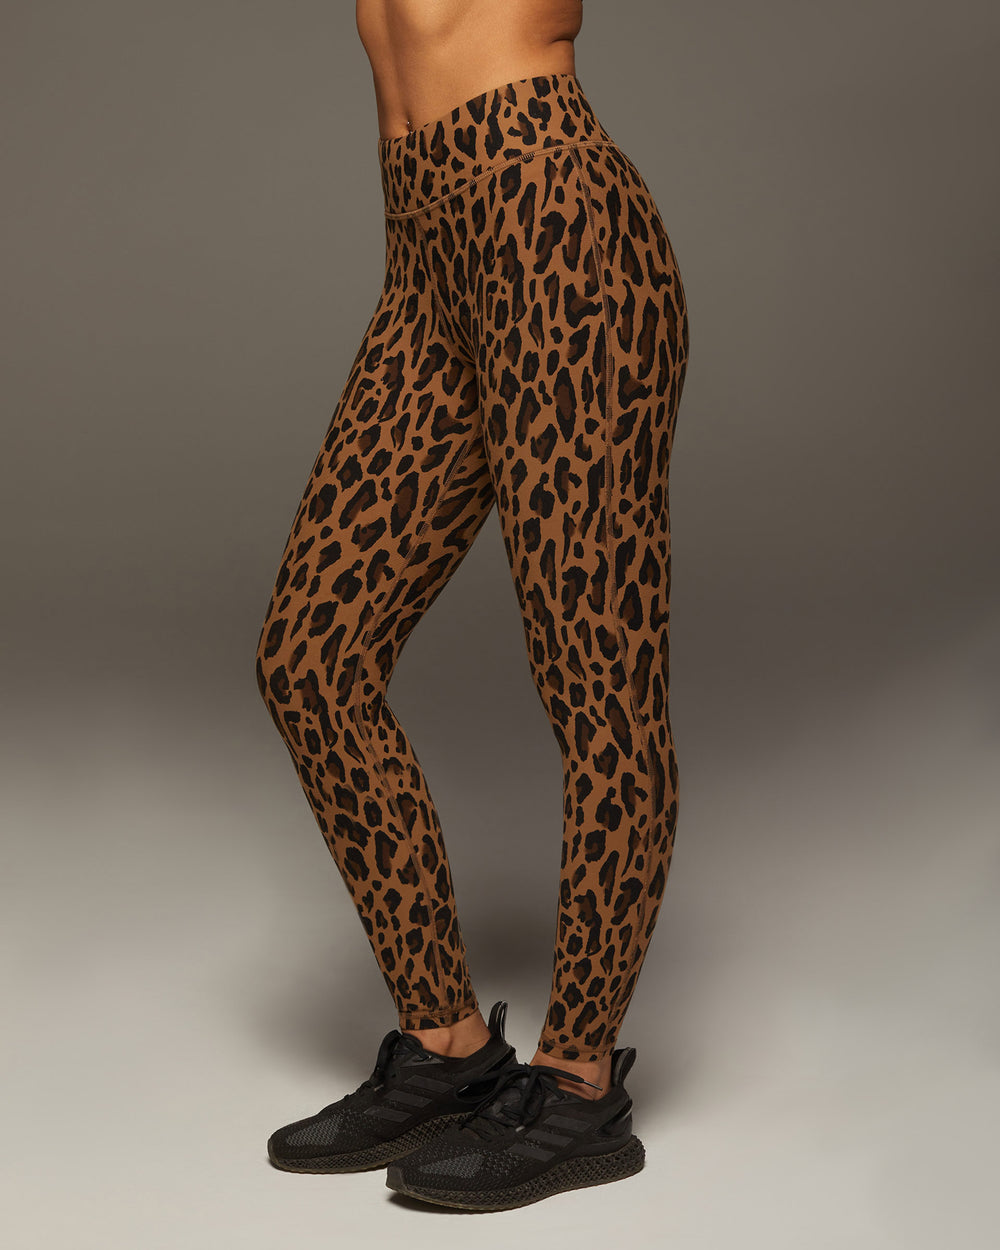 Shop the MICHI Verve Leopard Print Legging | Women's Designer Activewear